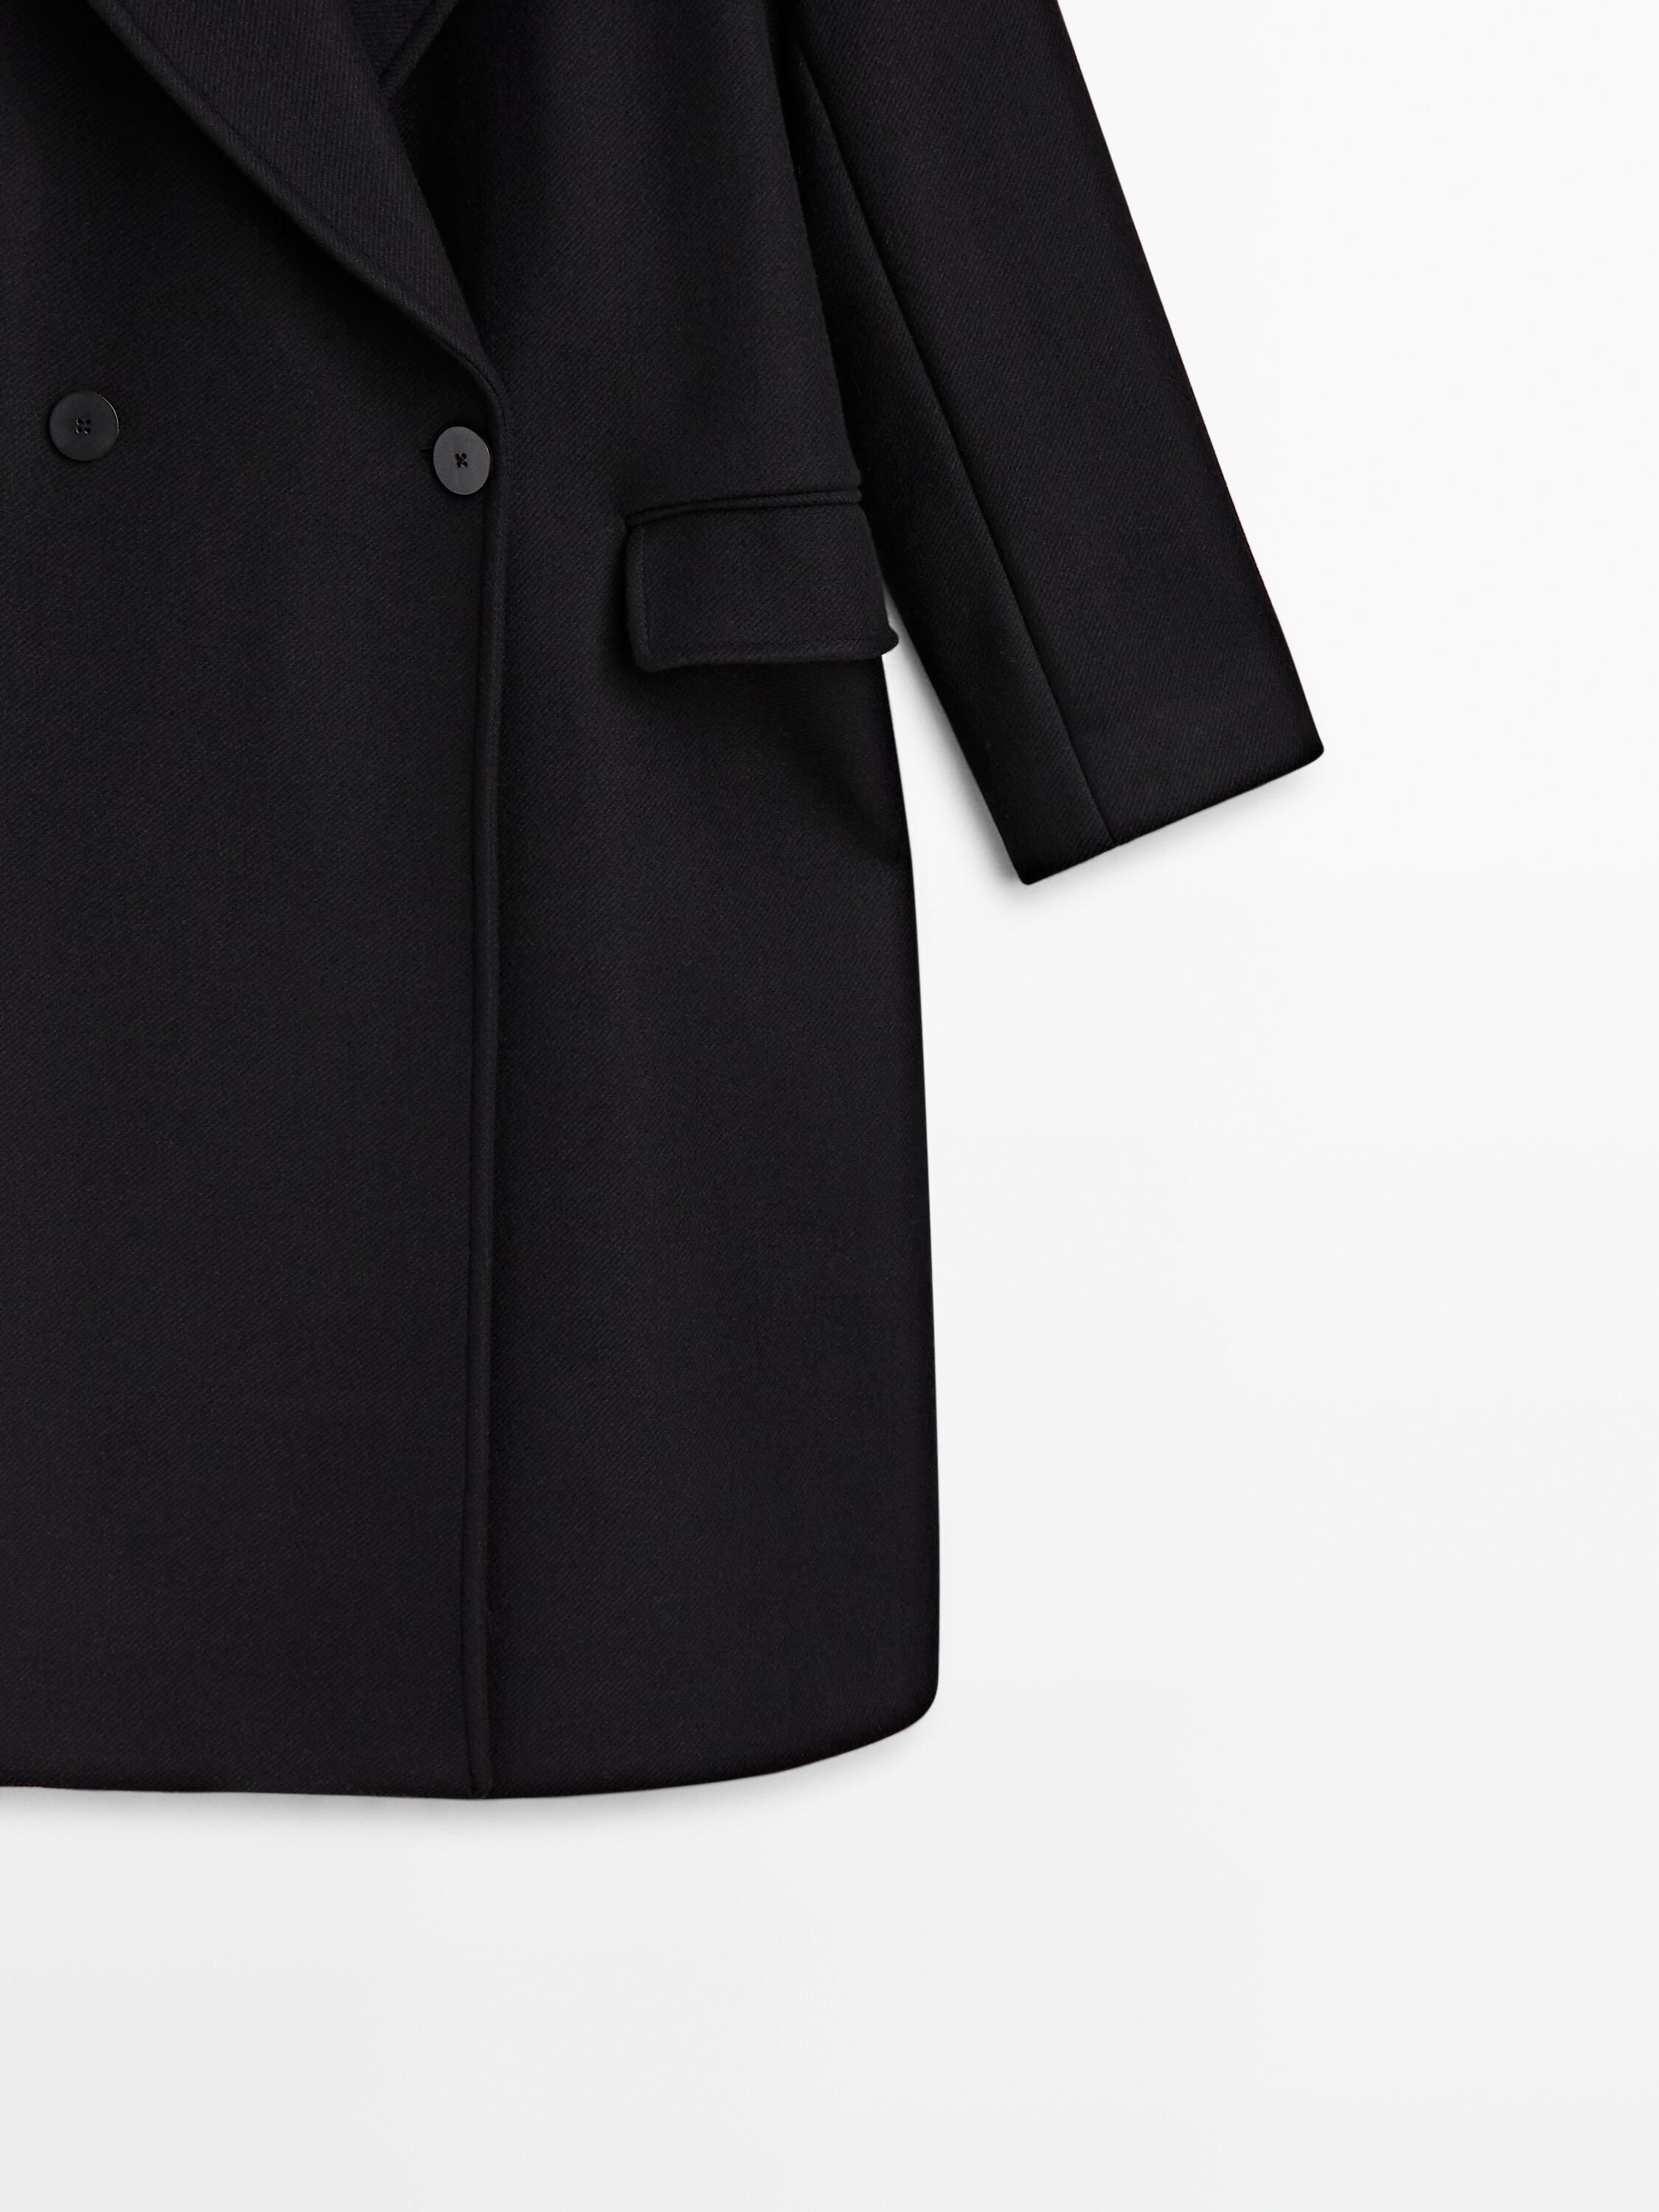 Black wool blend comfort coat